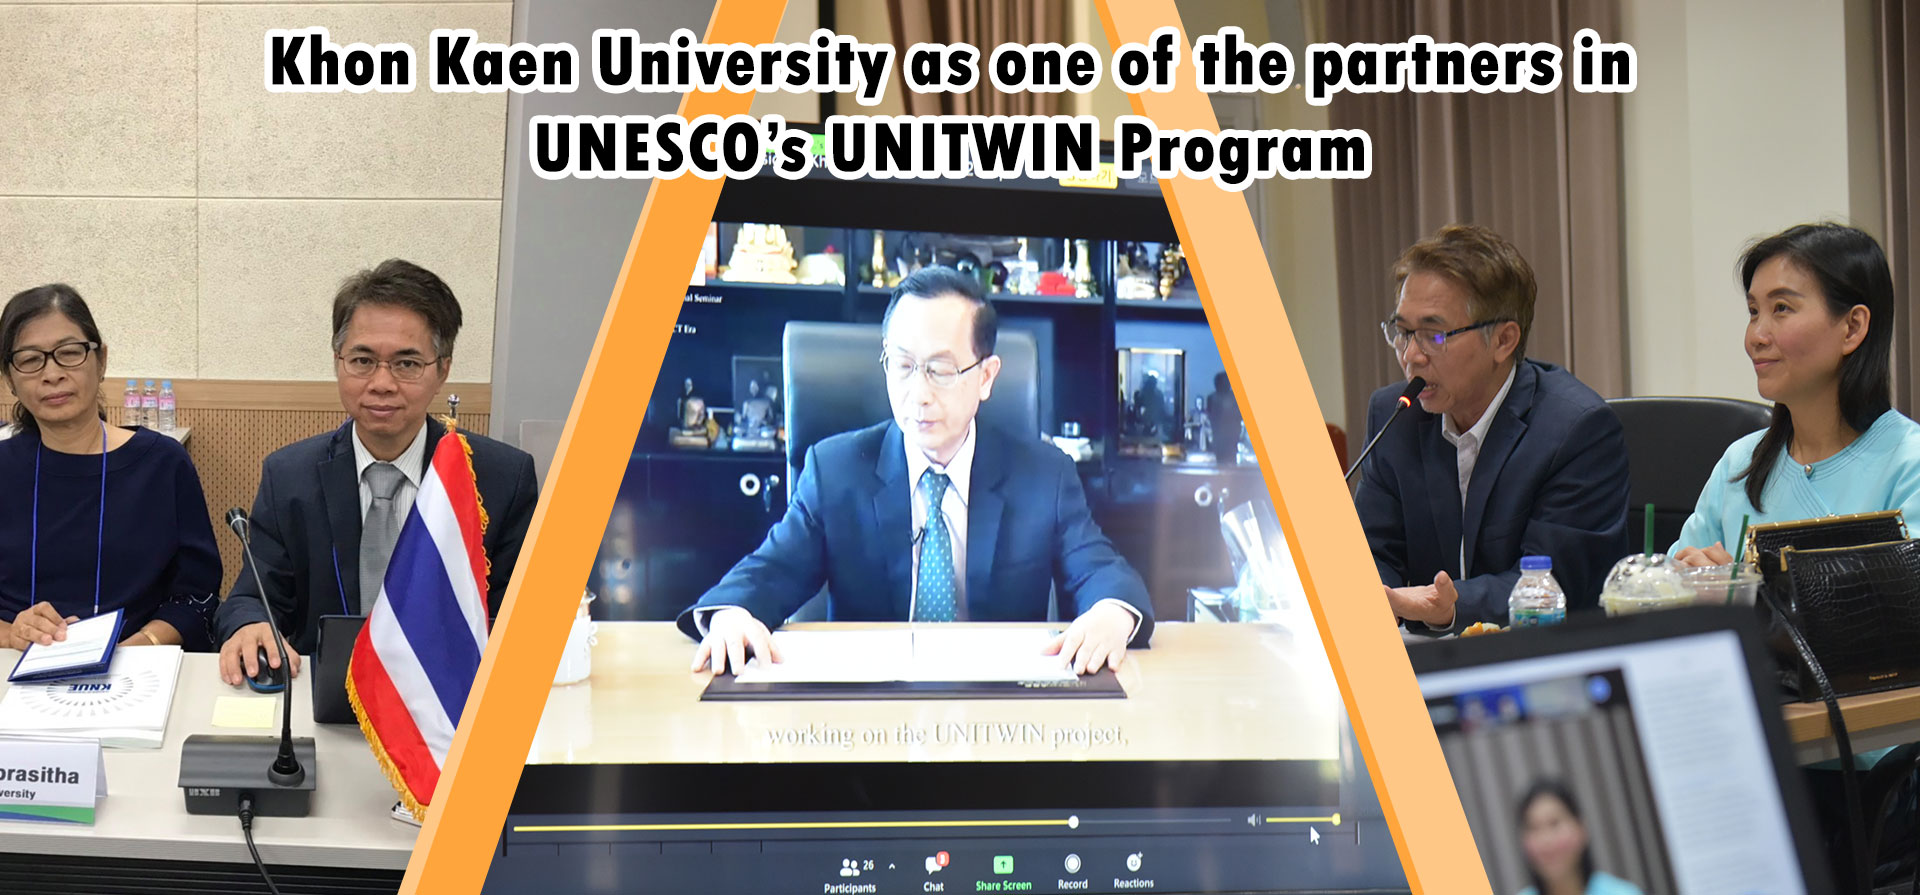 UNESCO’s UNITWIN Program